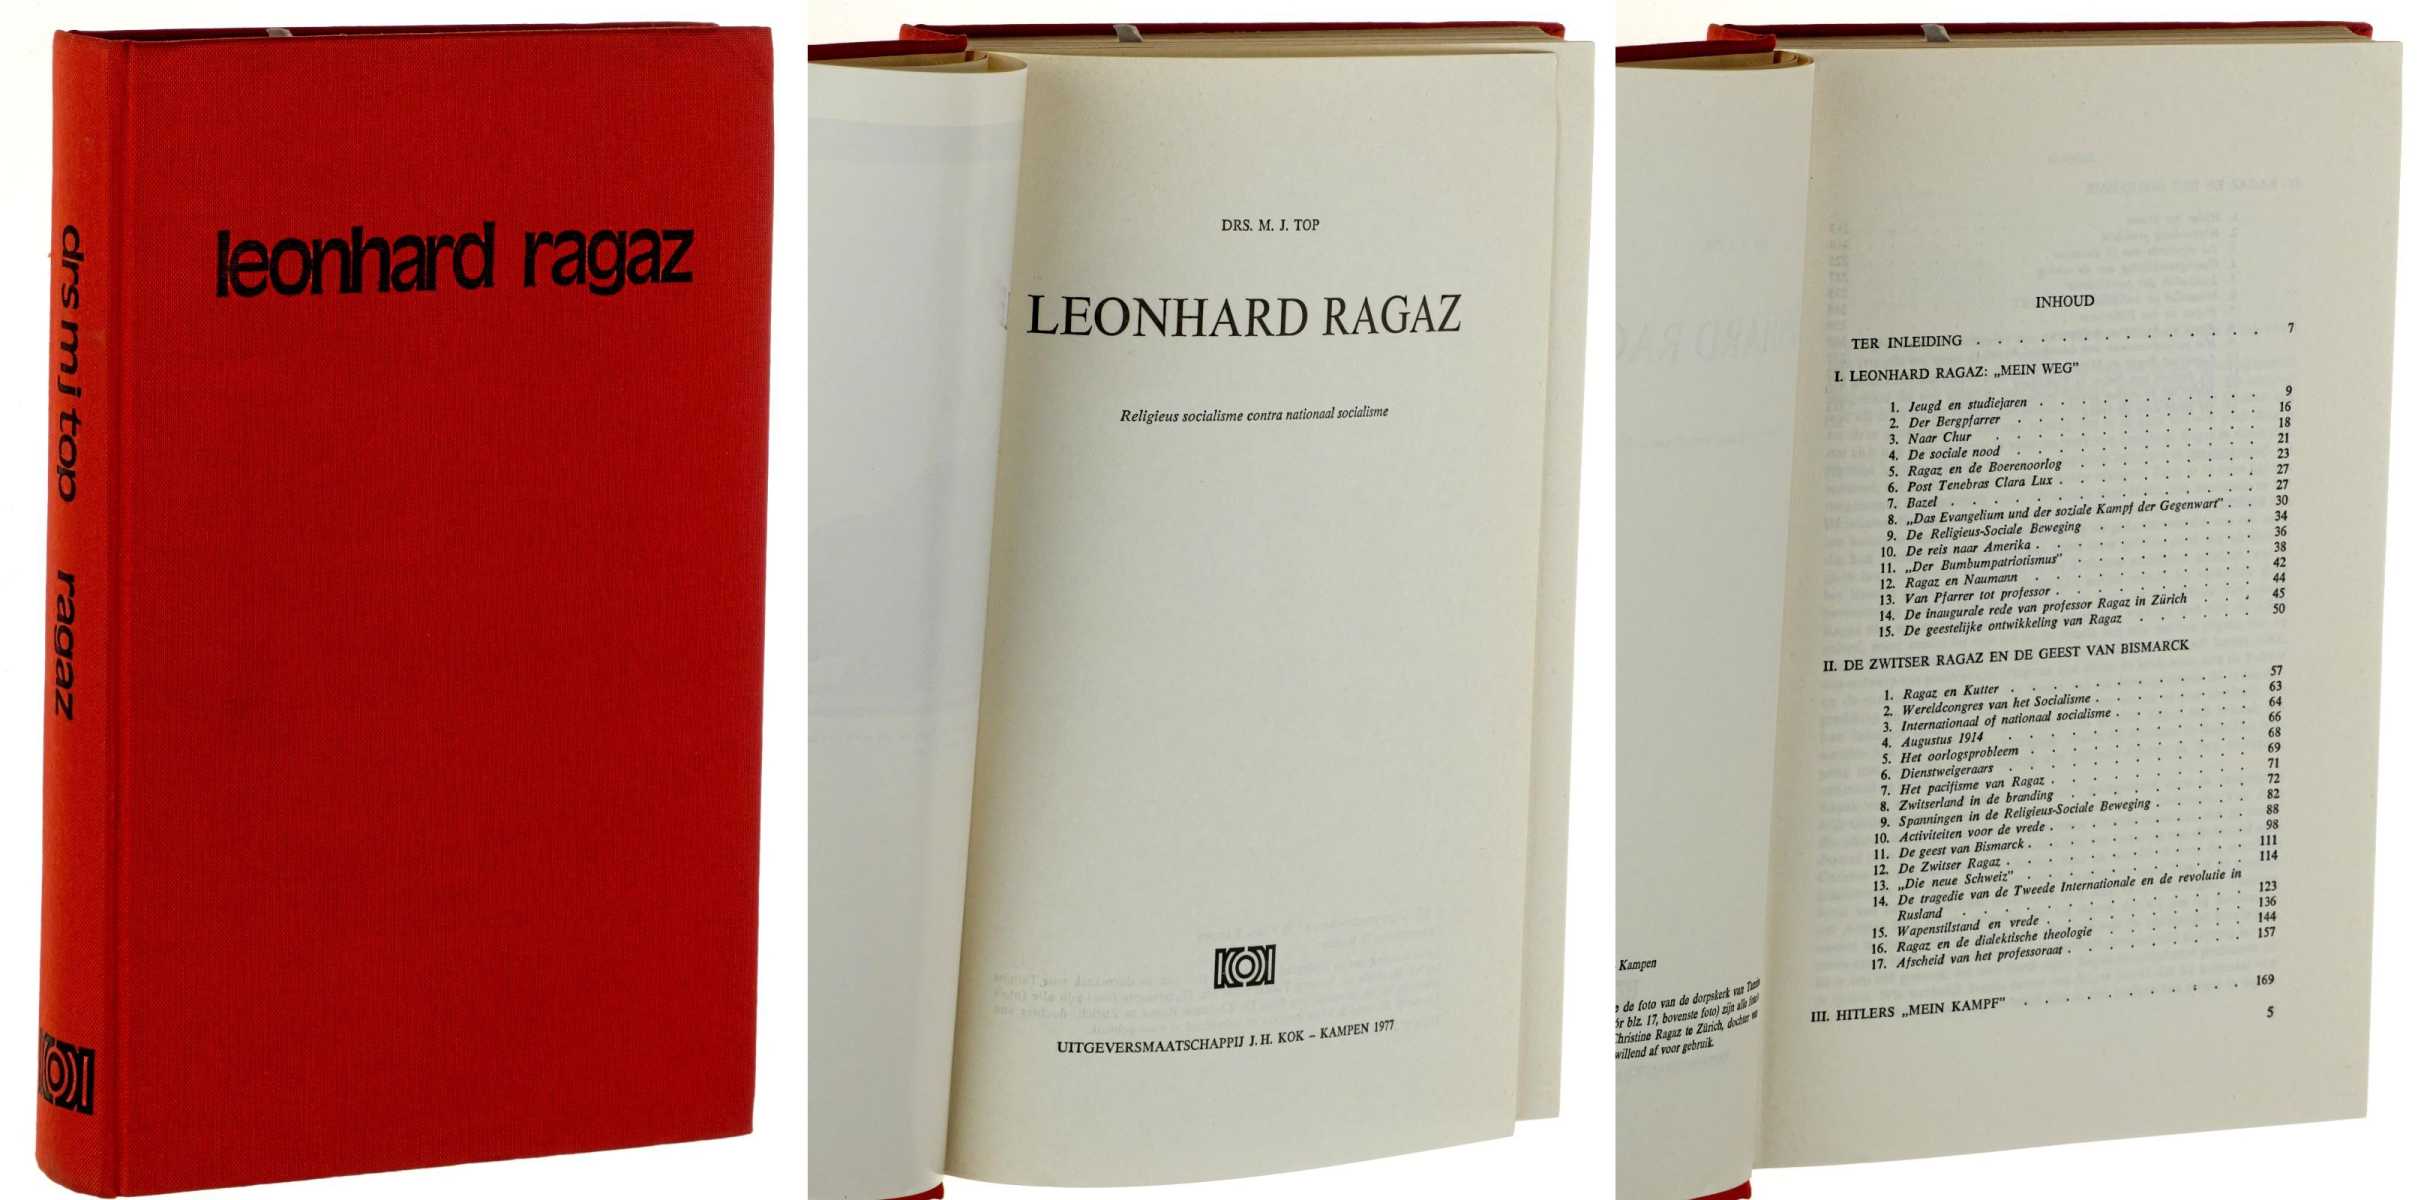 Top, M. J.:  Leonhard Ragaz. Religieus socialisme contra nationaal socialisme. 